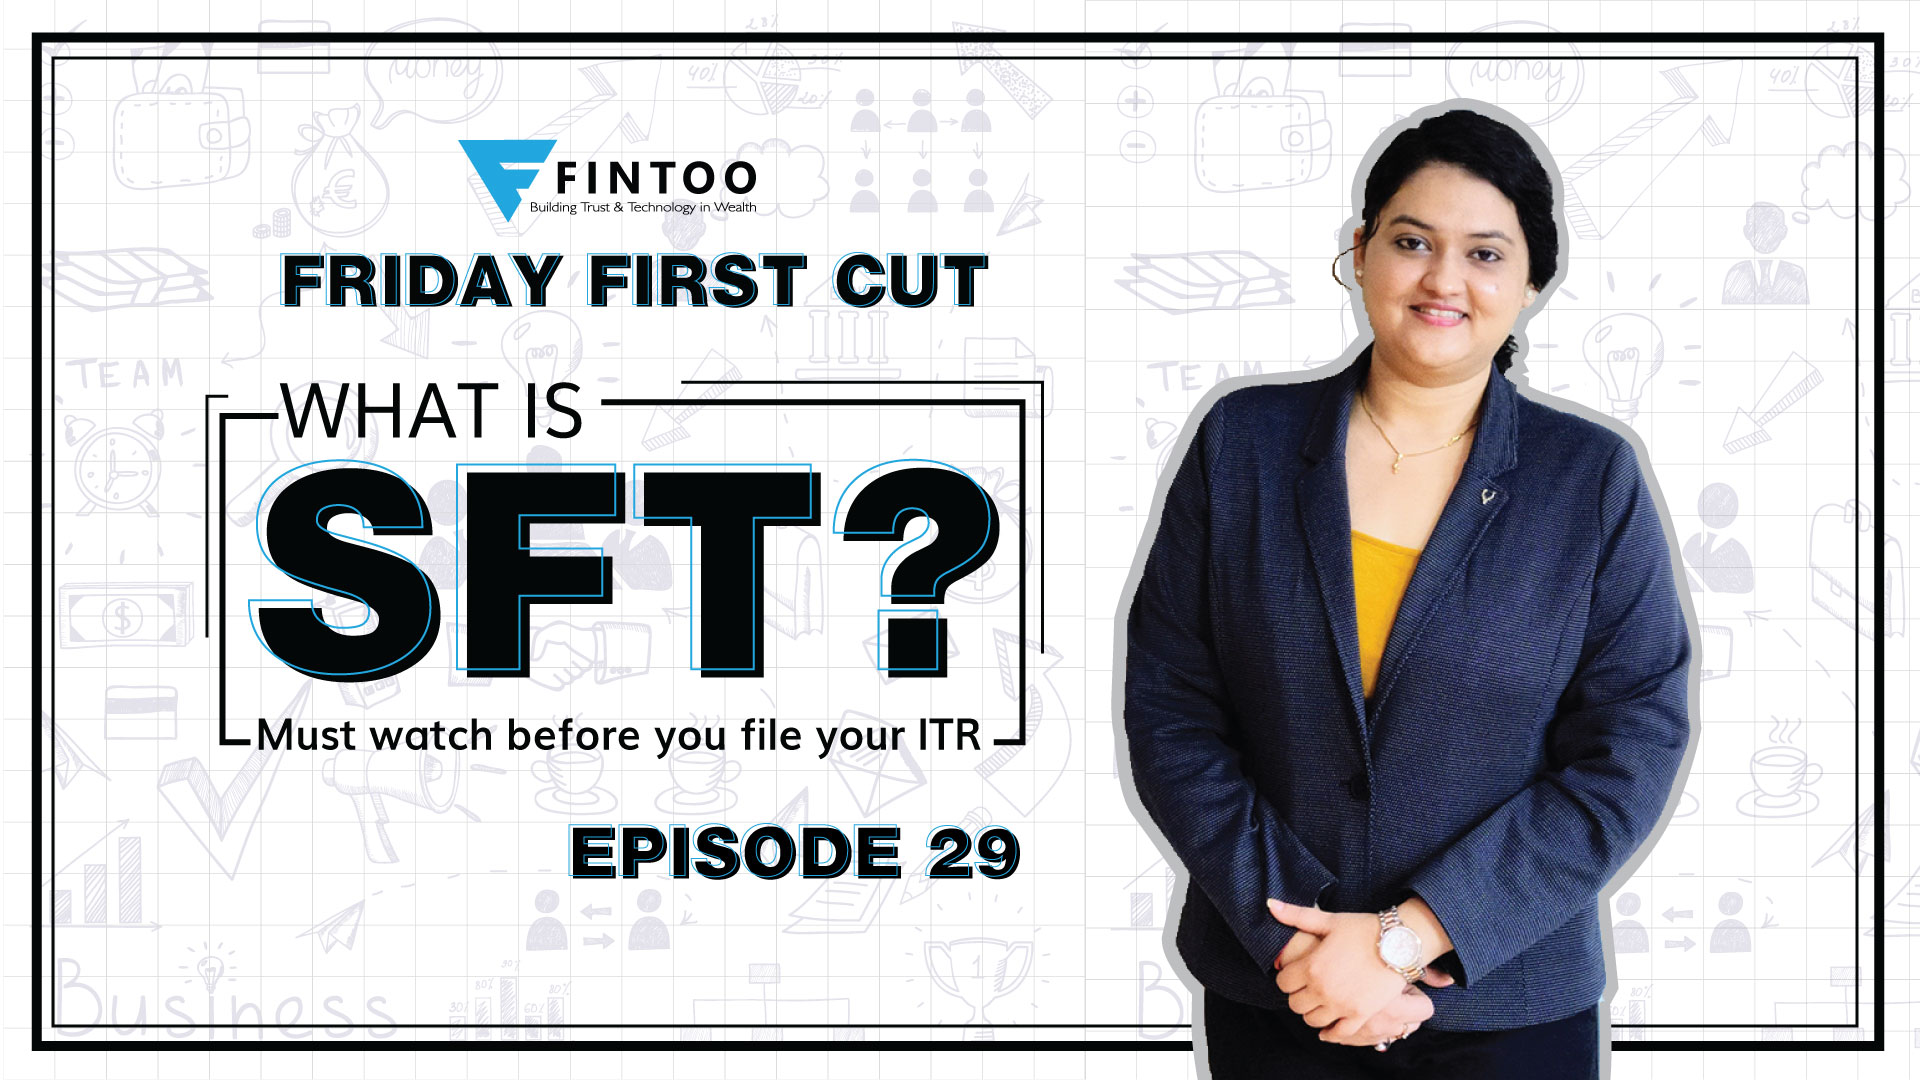 Fintoo Friday First Cut Episode 29